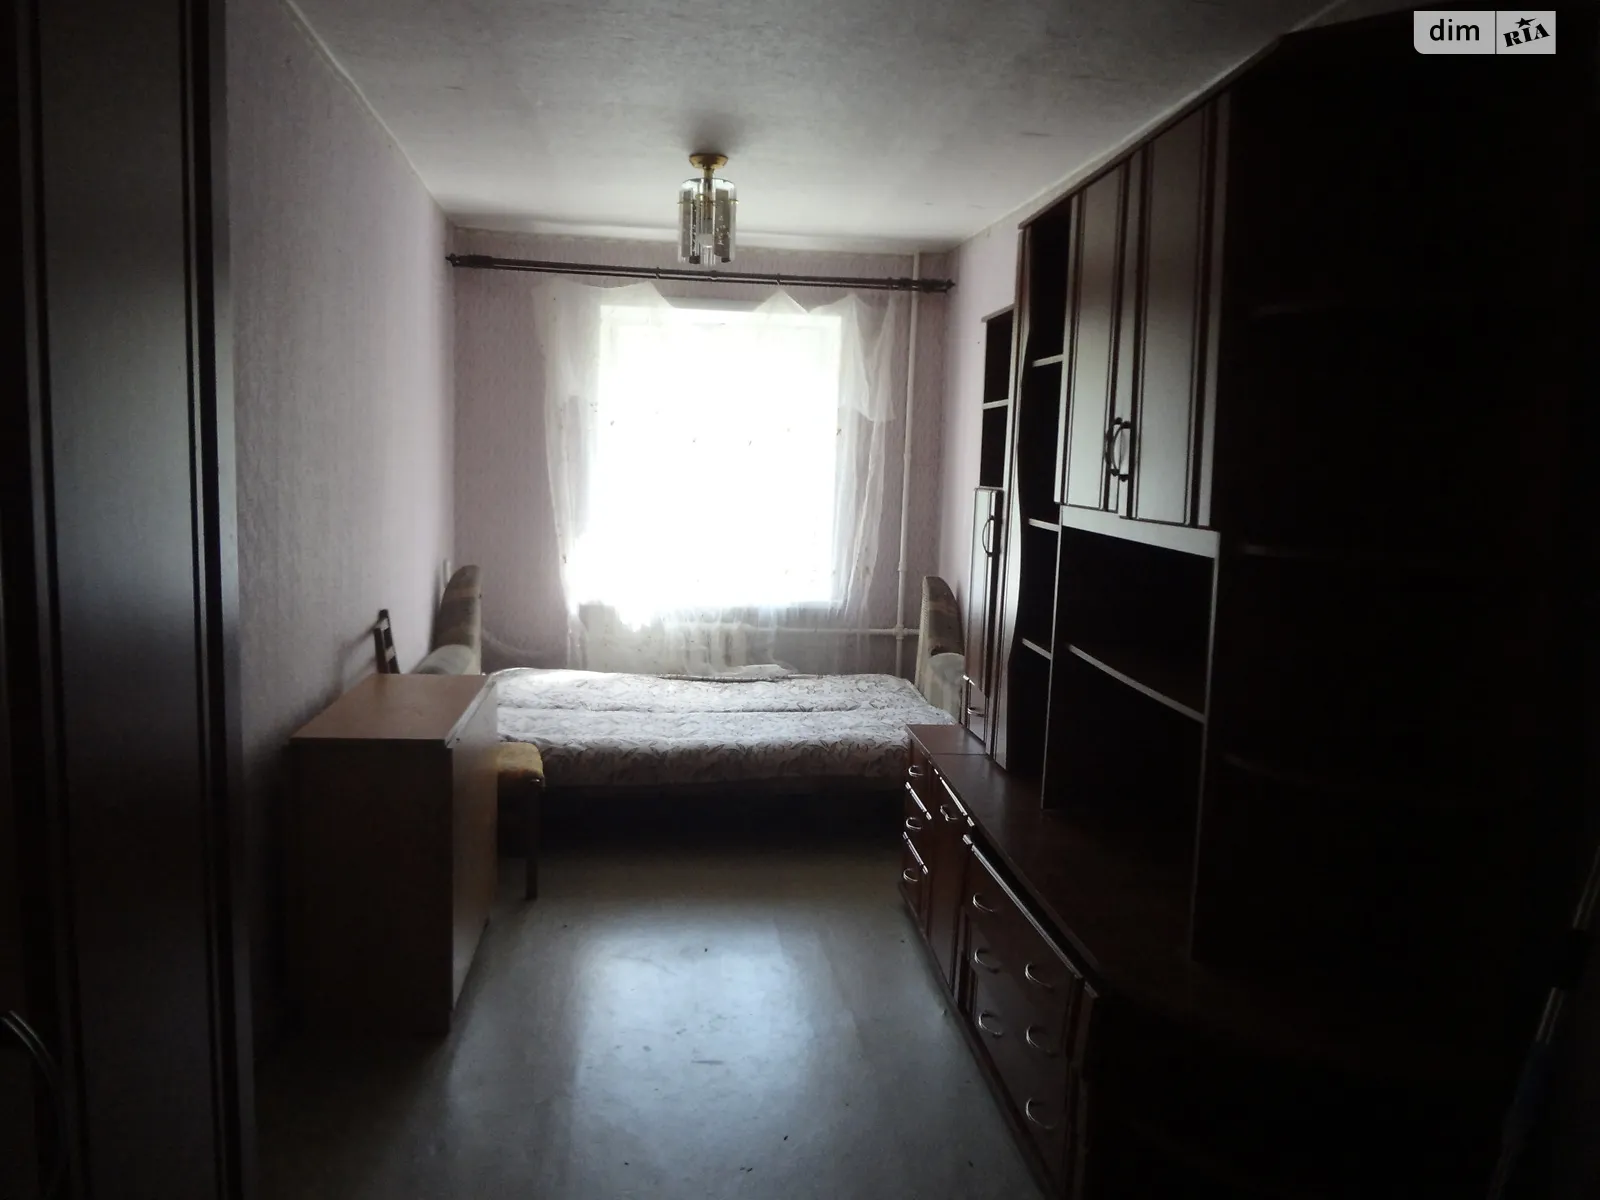 Продается комната 30 кв. м в Харькове - фото 2